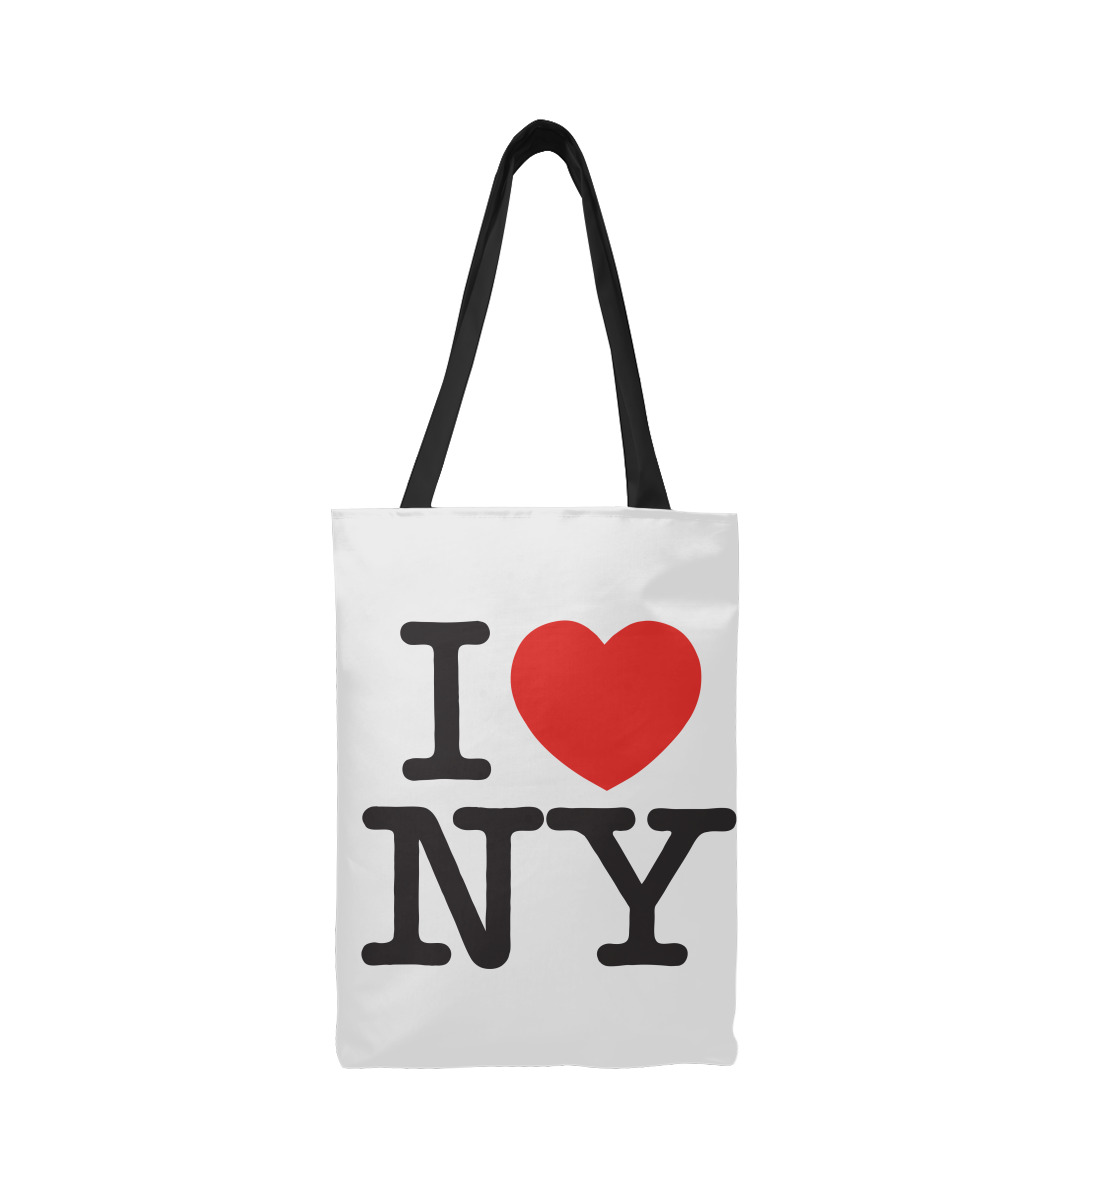 1 bag new. Шоппер i Love New York. Сумка шоппер i 3 NY. Сумка New York. Сумка New York 2.